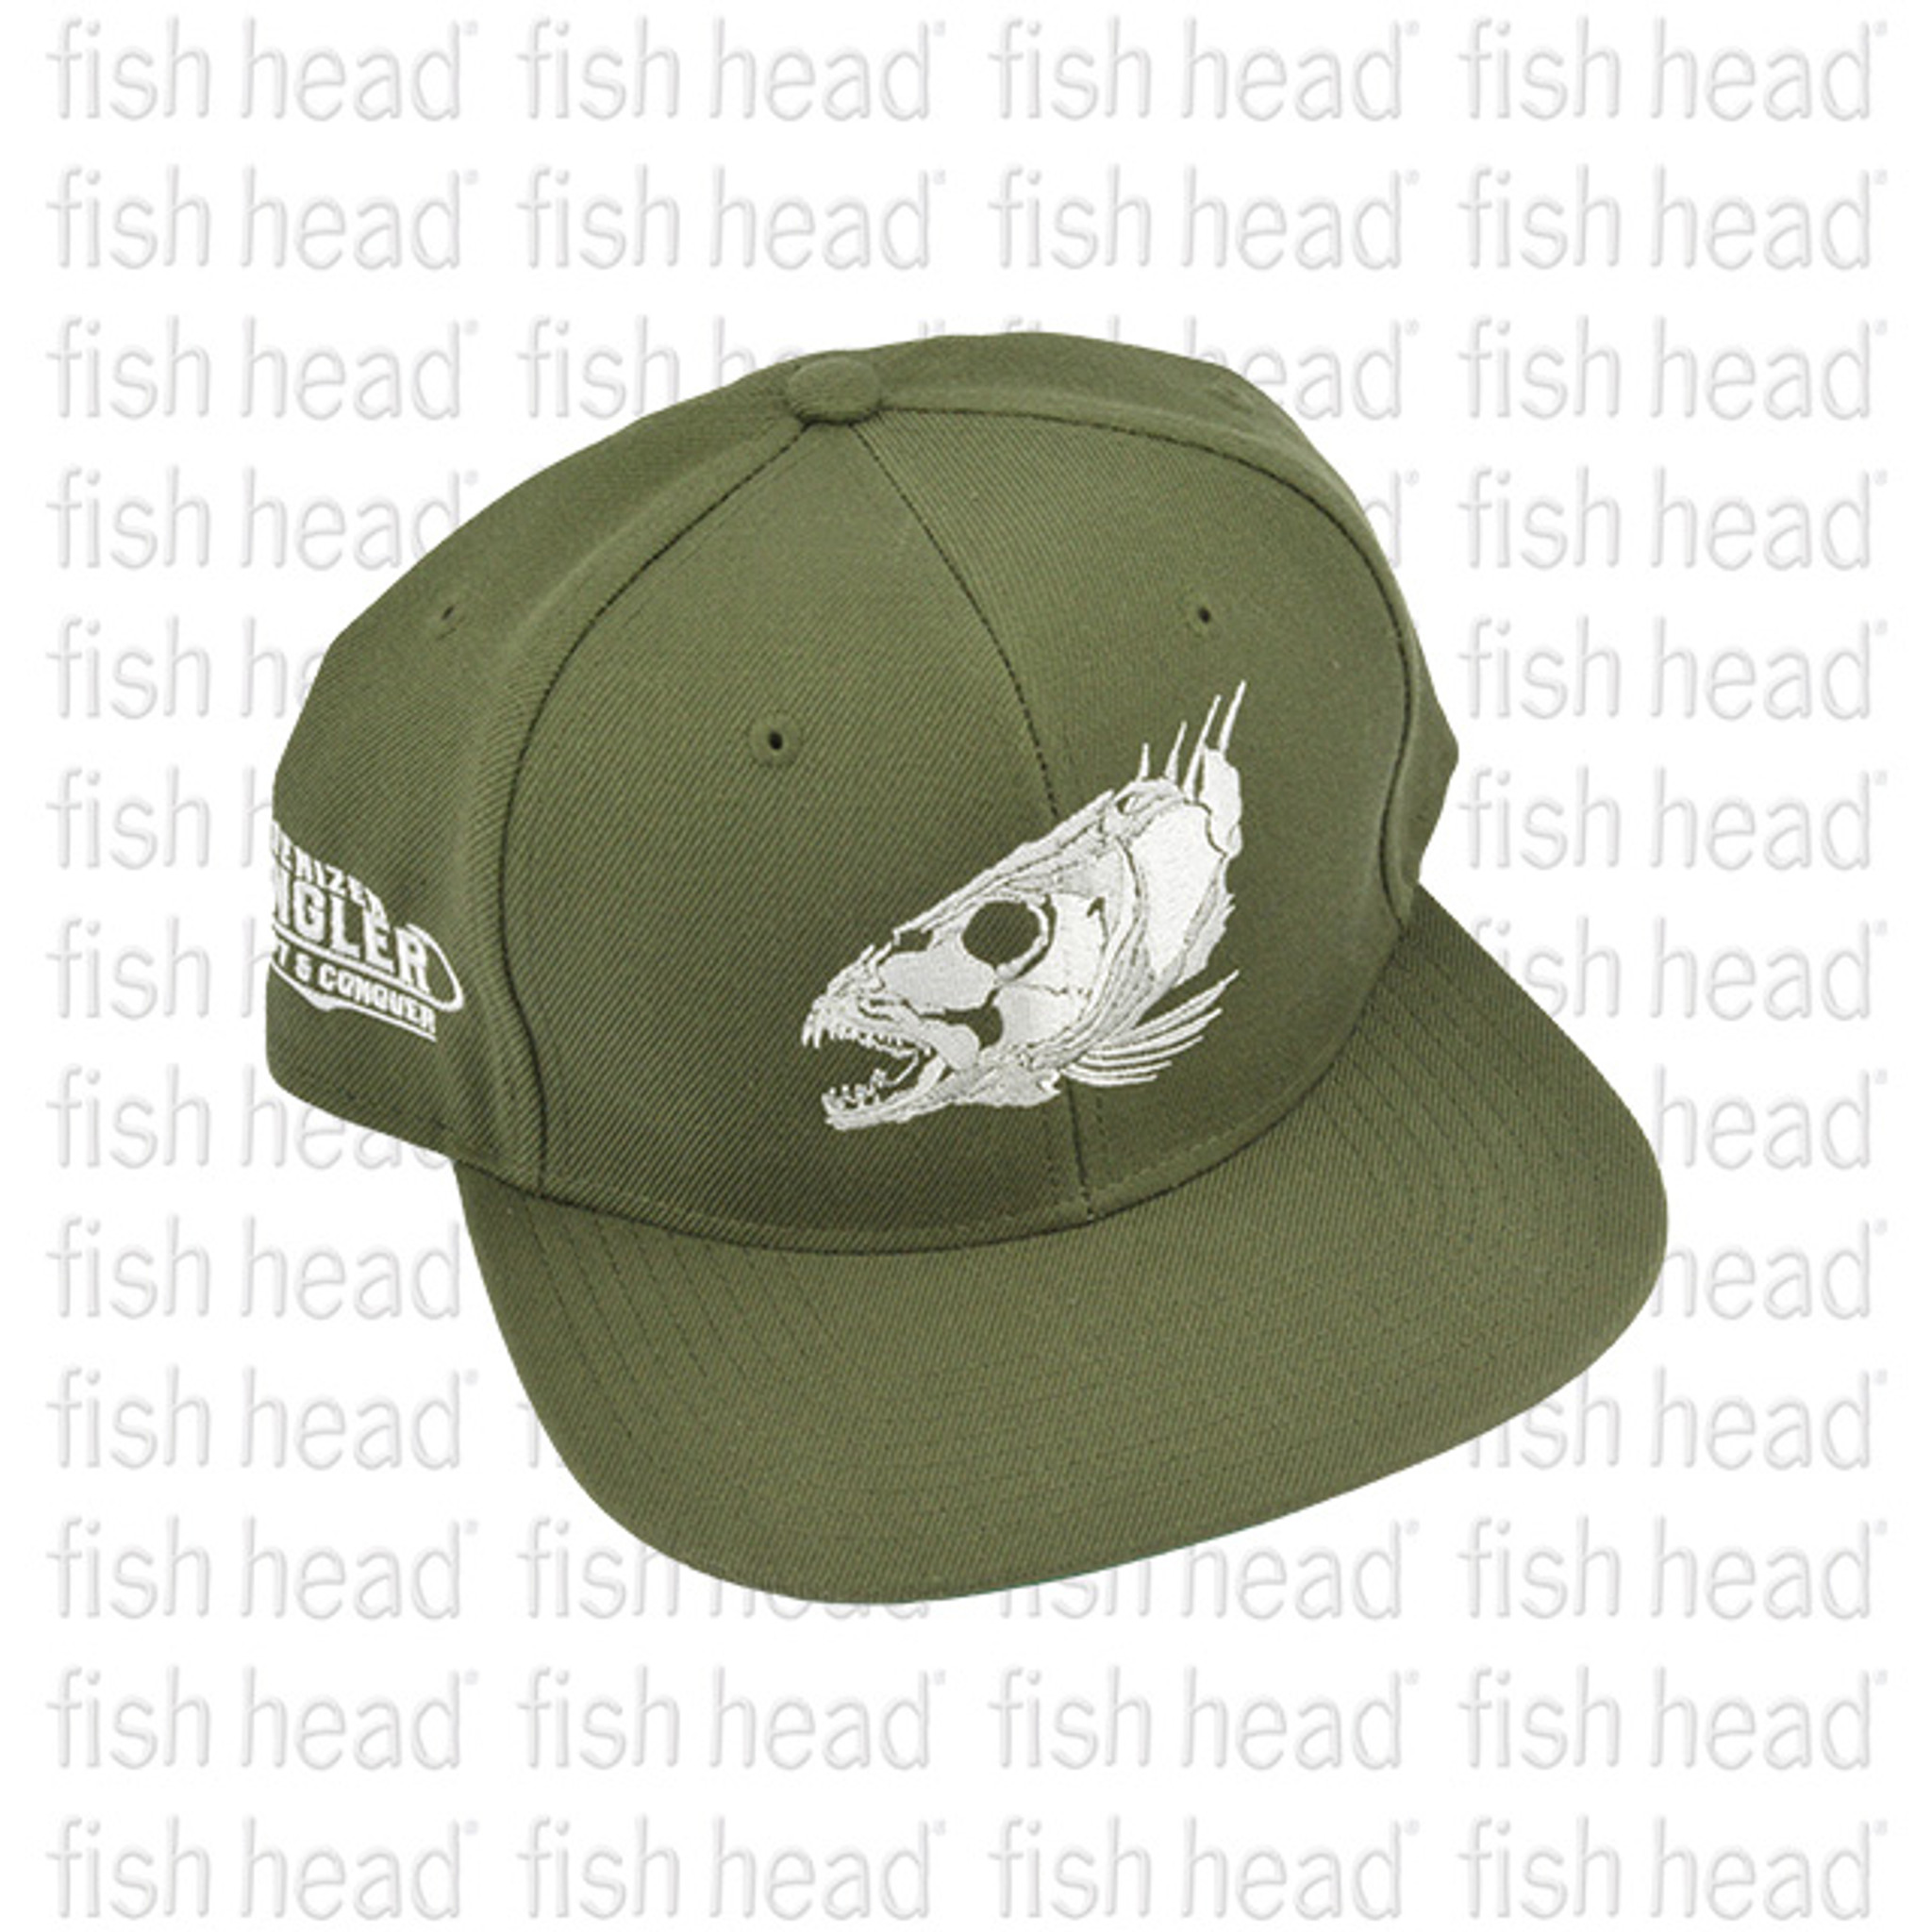 Denizen Angler Hat - Fish Head